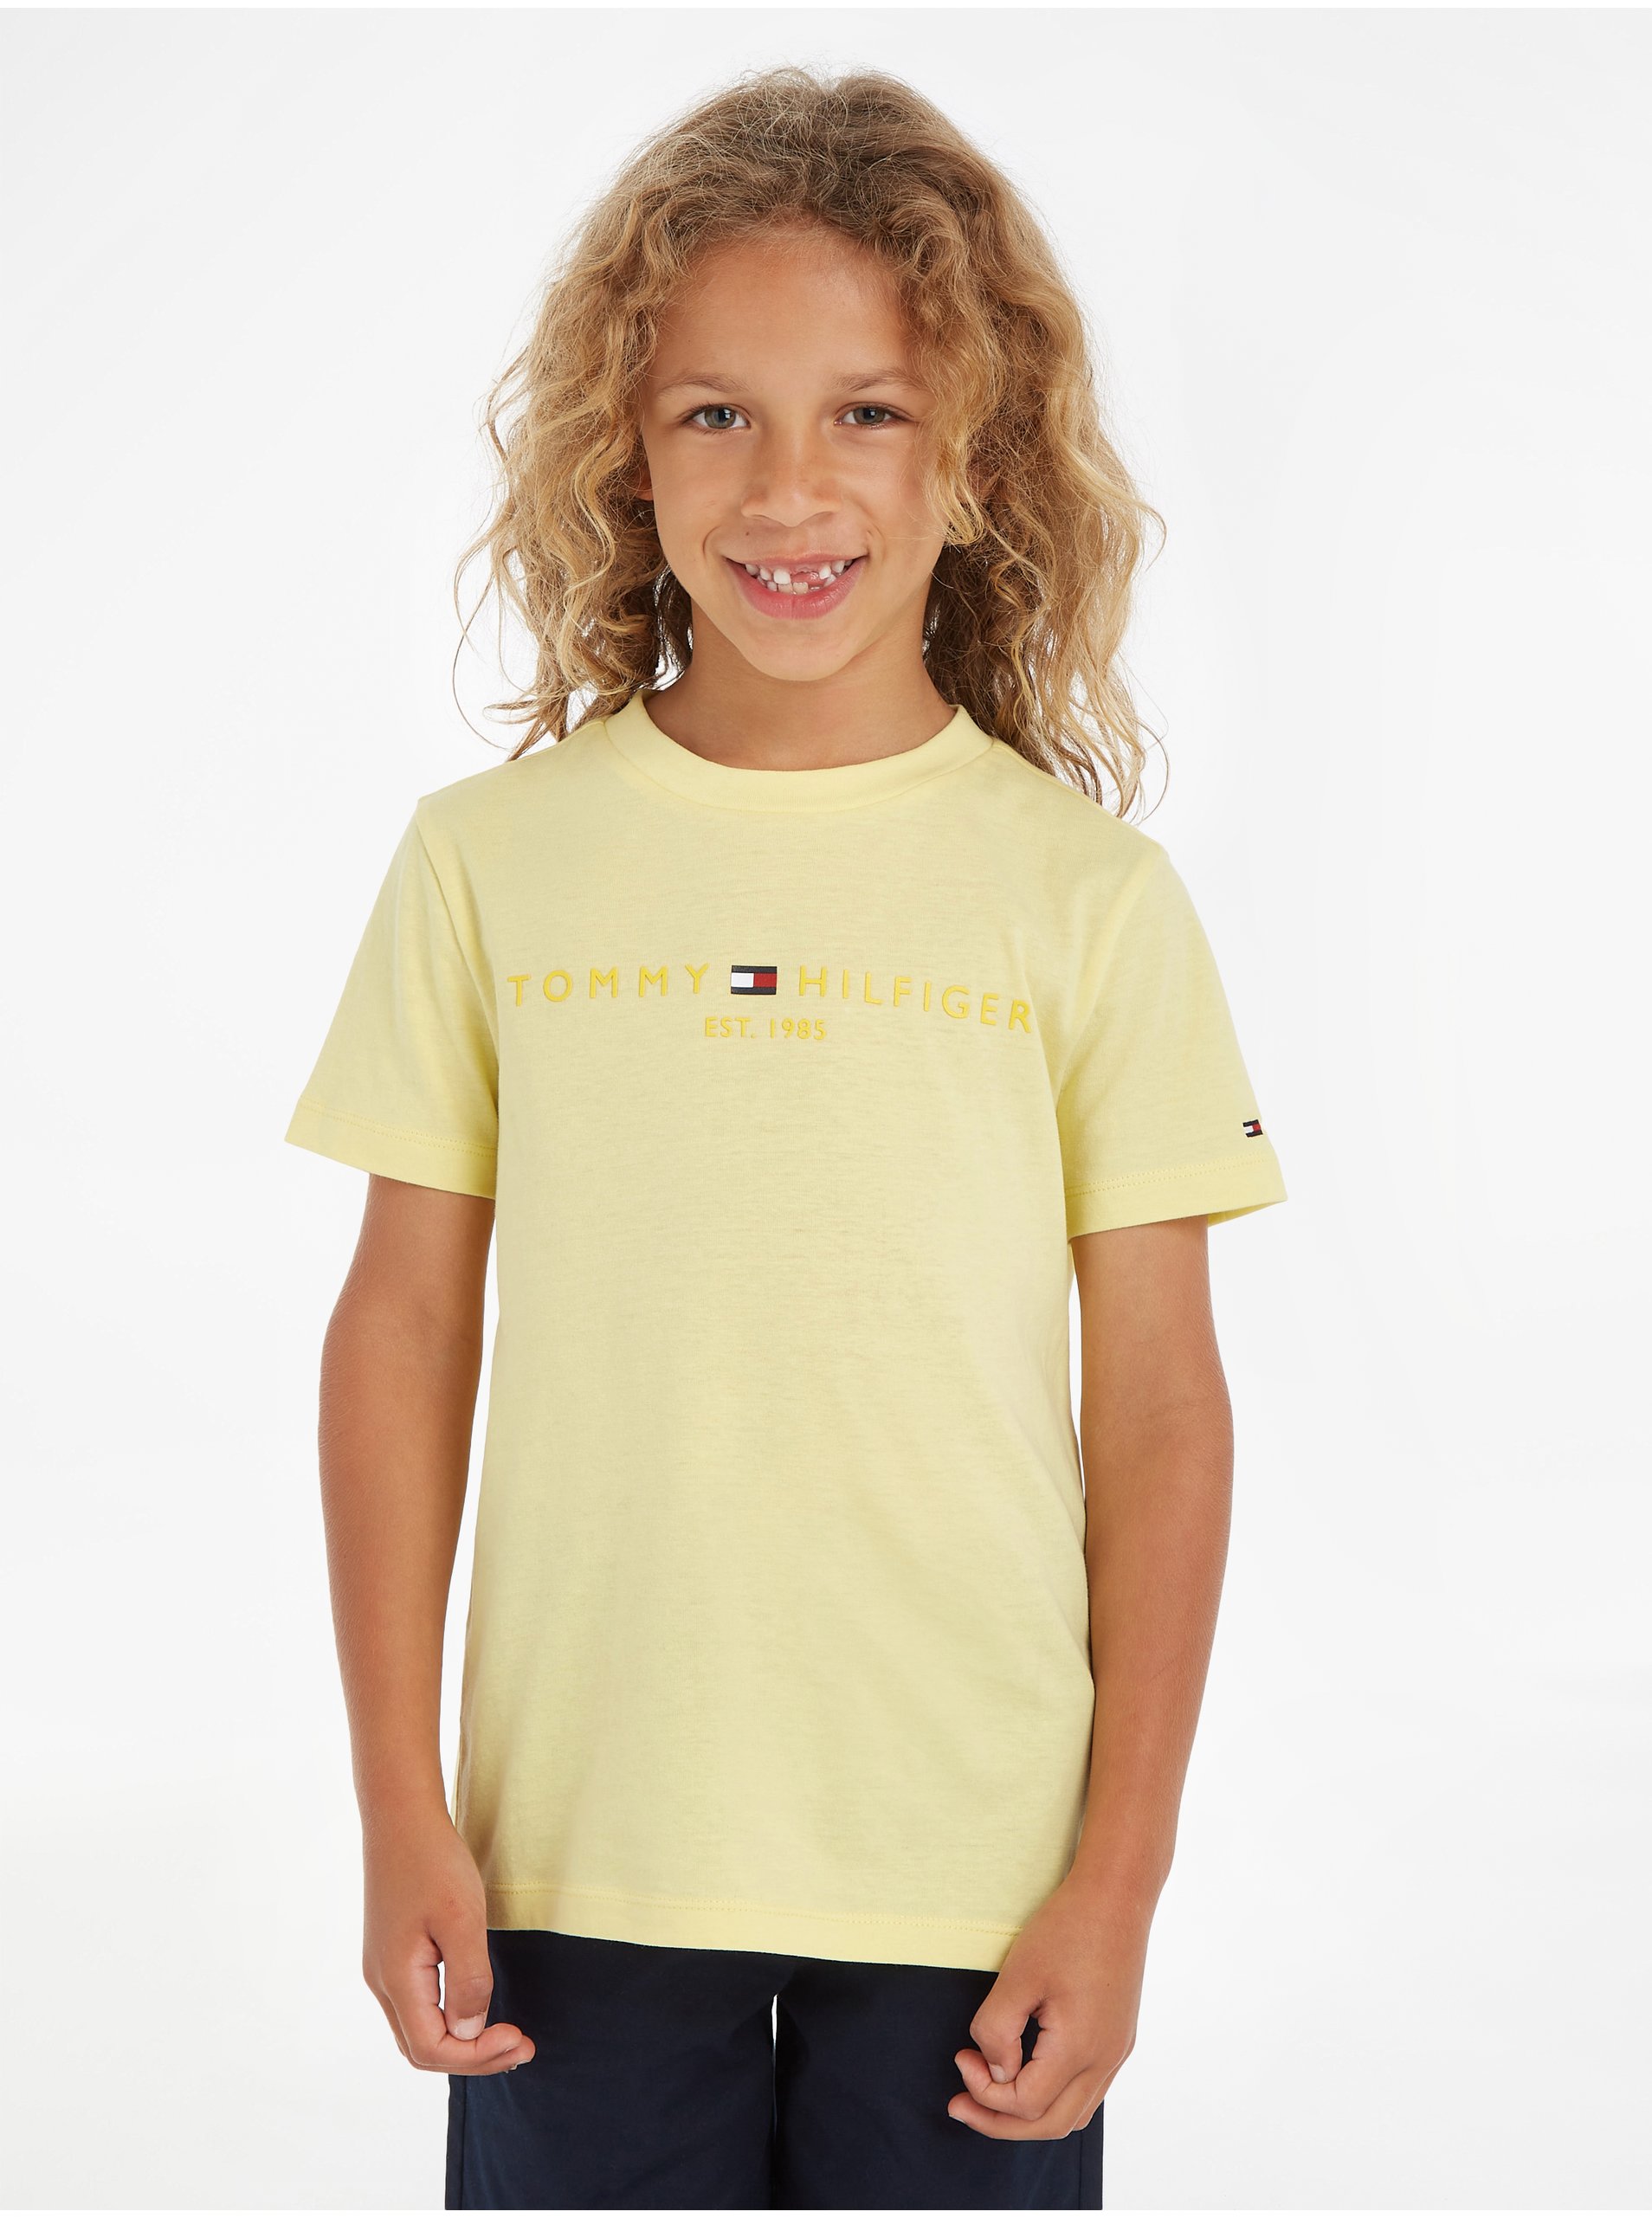 Lacno Svetložlté detské tričko Tommy Hilfiger